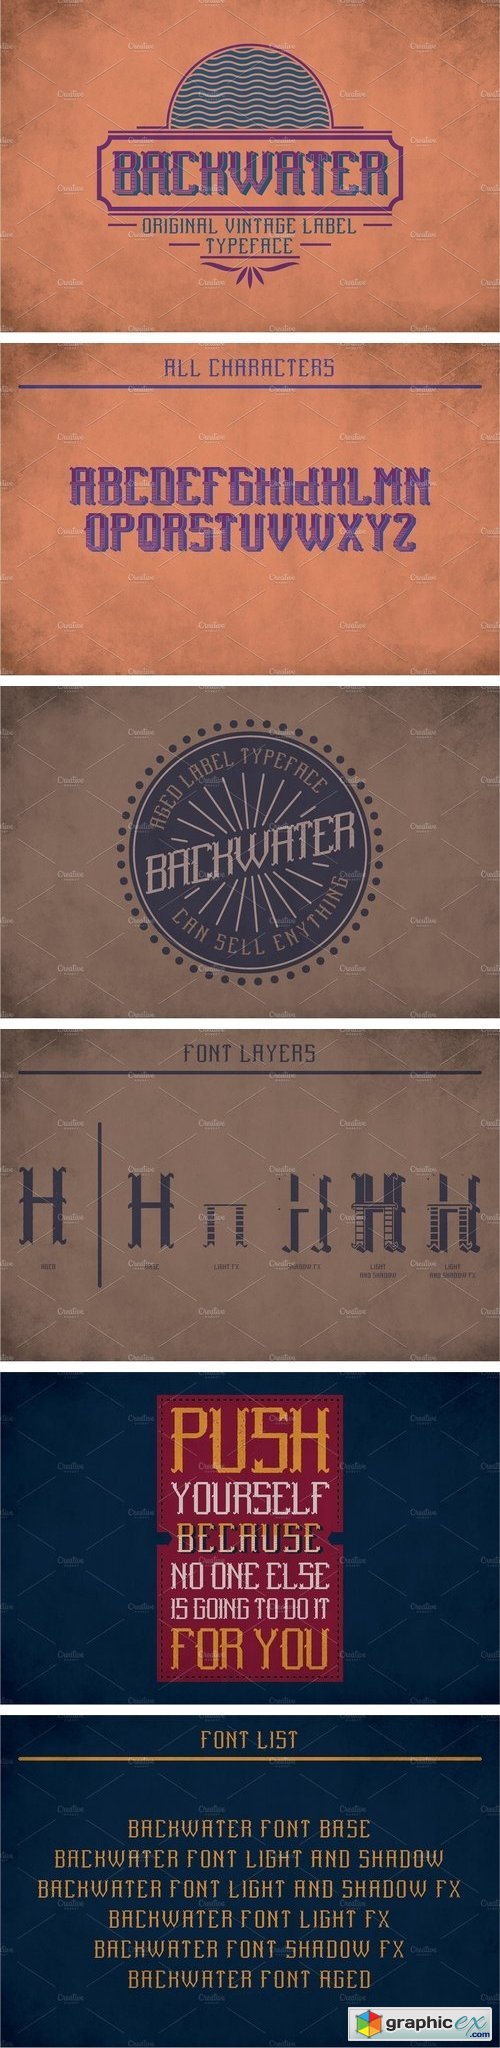 Backwater Vintage Label Typeface